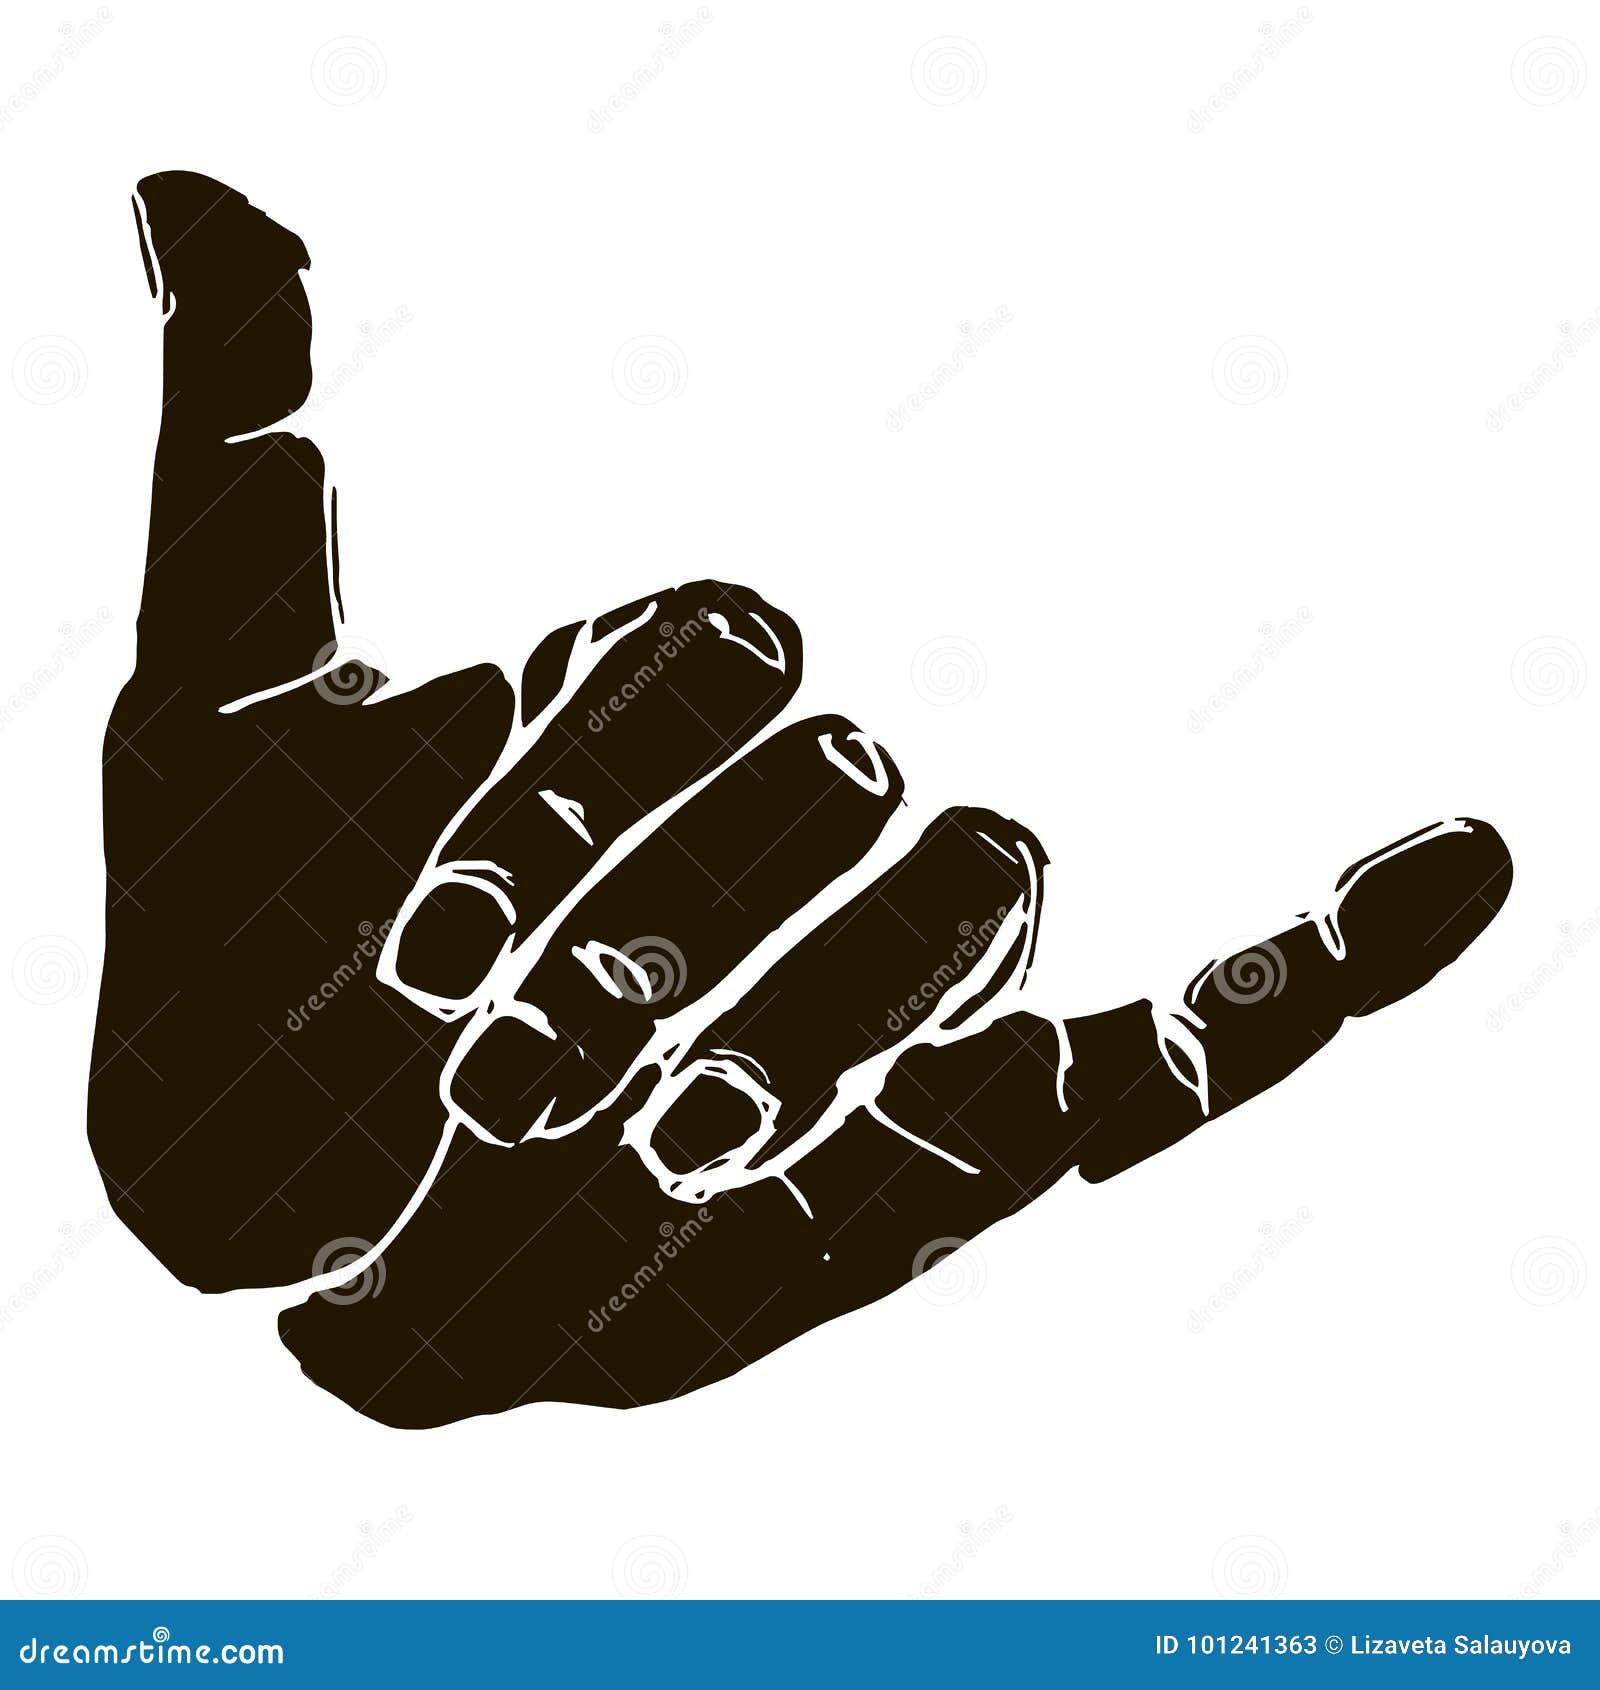 black silhouette realistic shaka hand gesture icon graphic